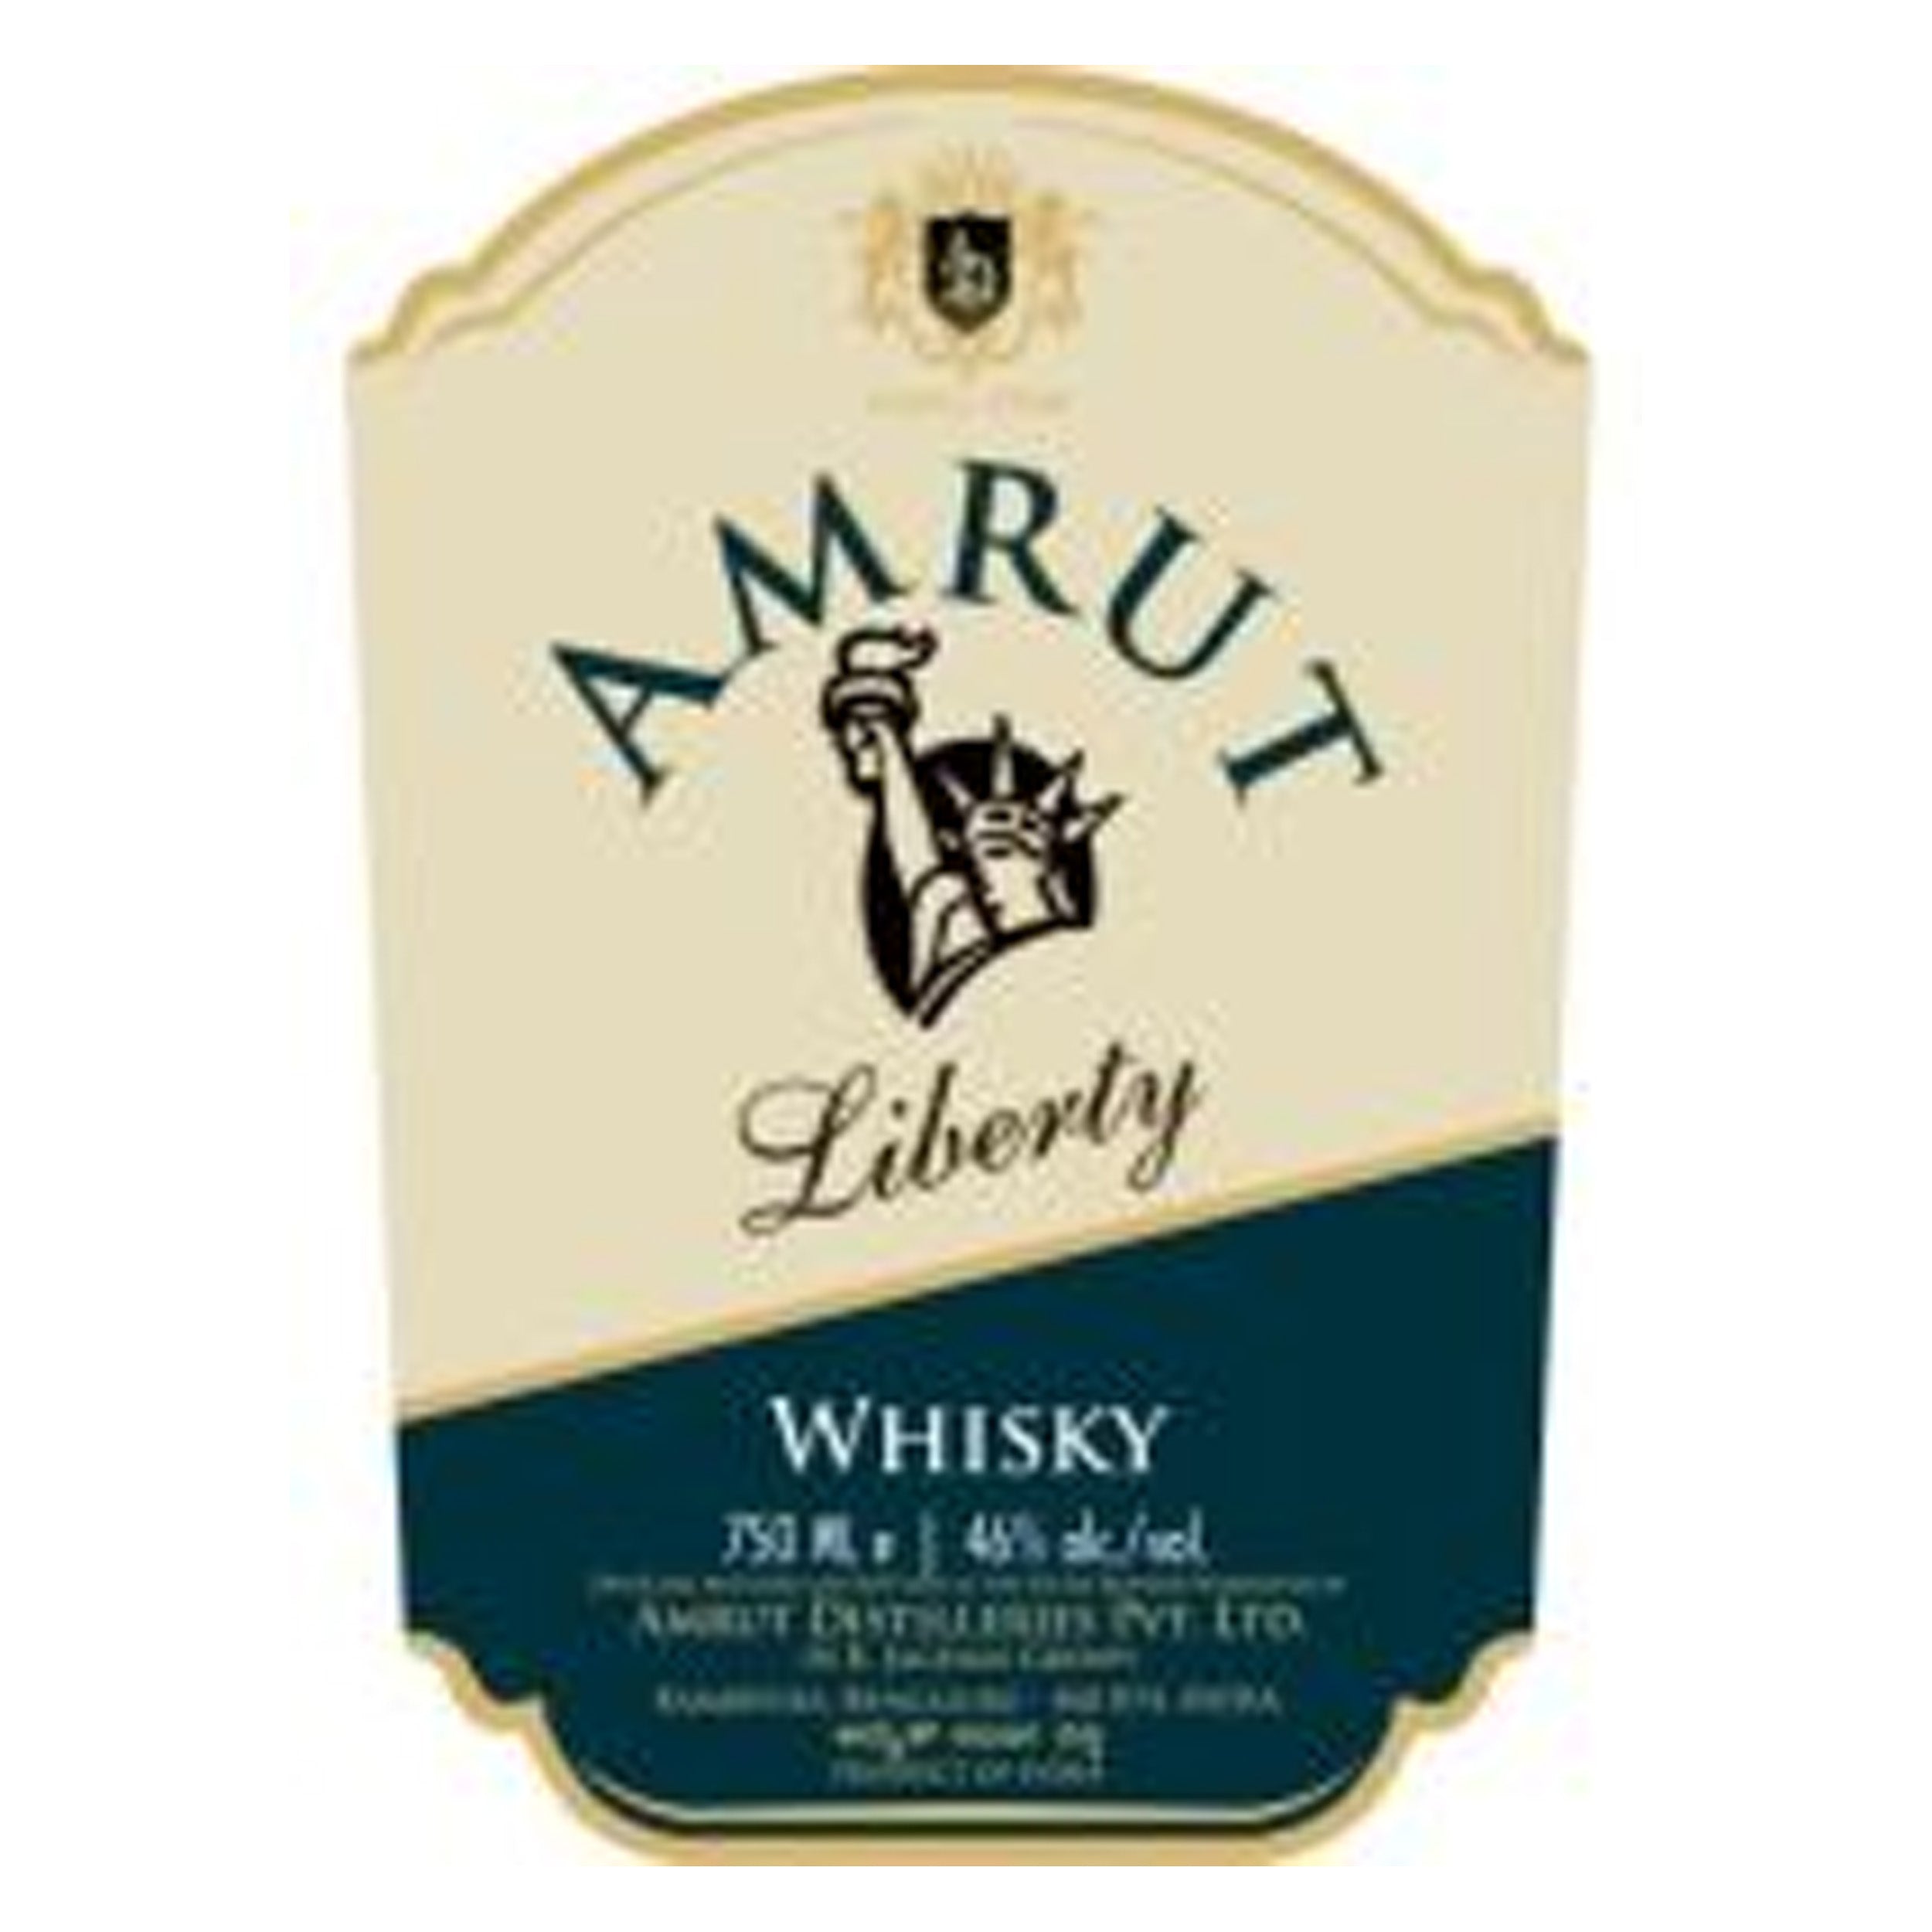 Amrut Liberty Whisky